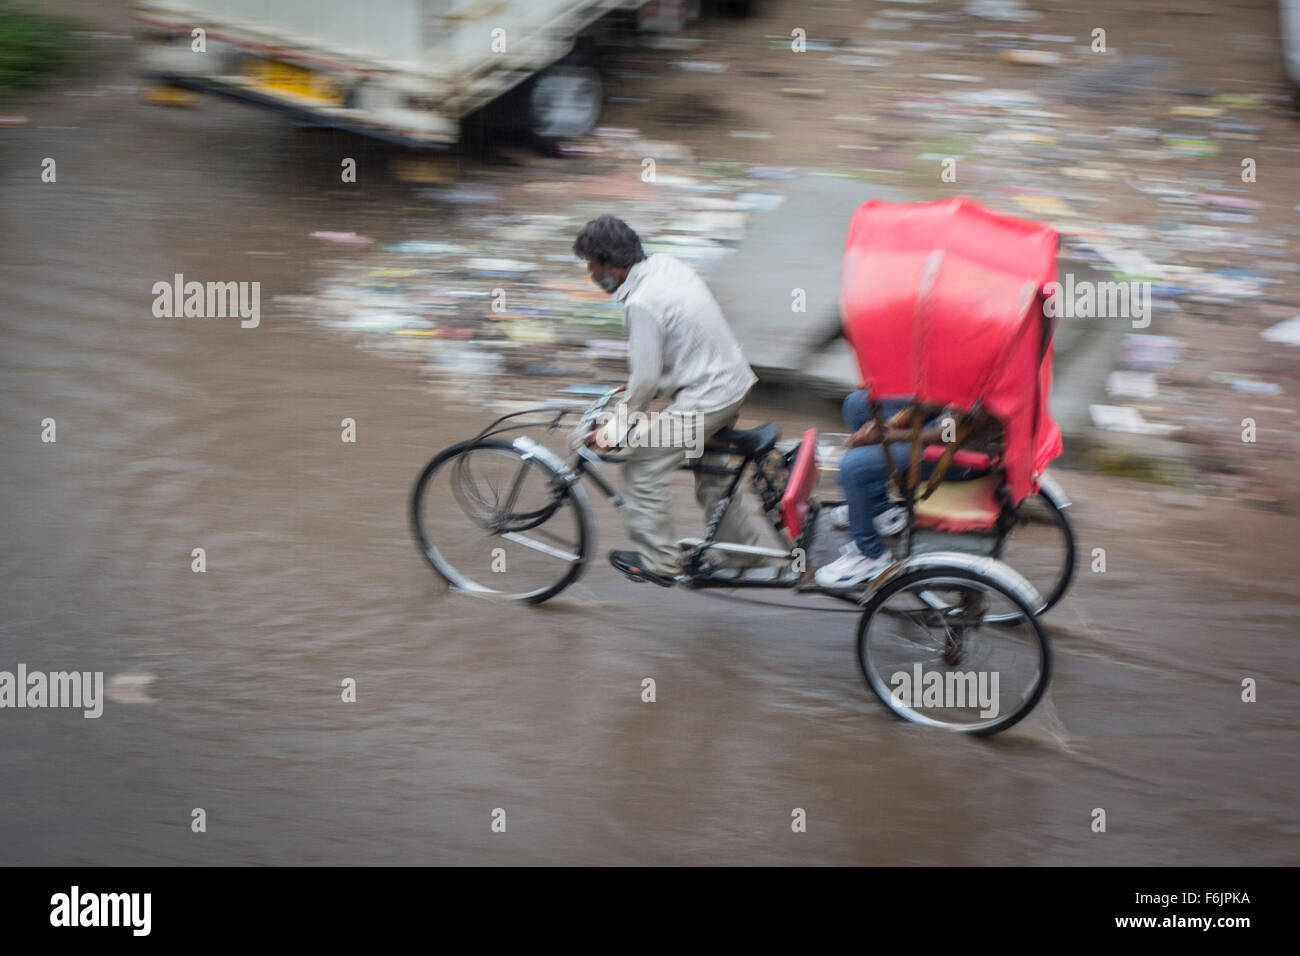 Bicycle rickshaw pedaling through flooding in the streets (Jaipur, India). Stock Photo